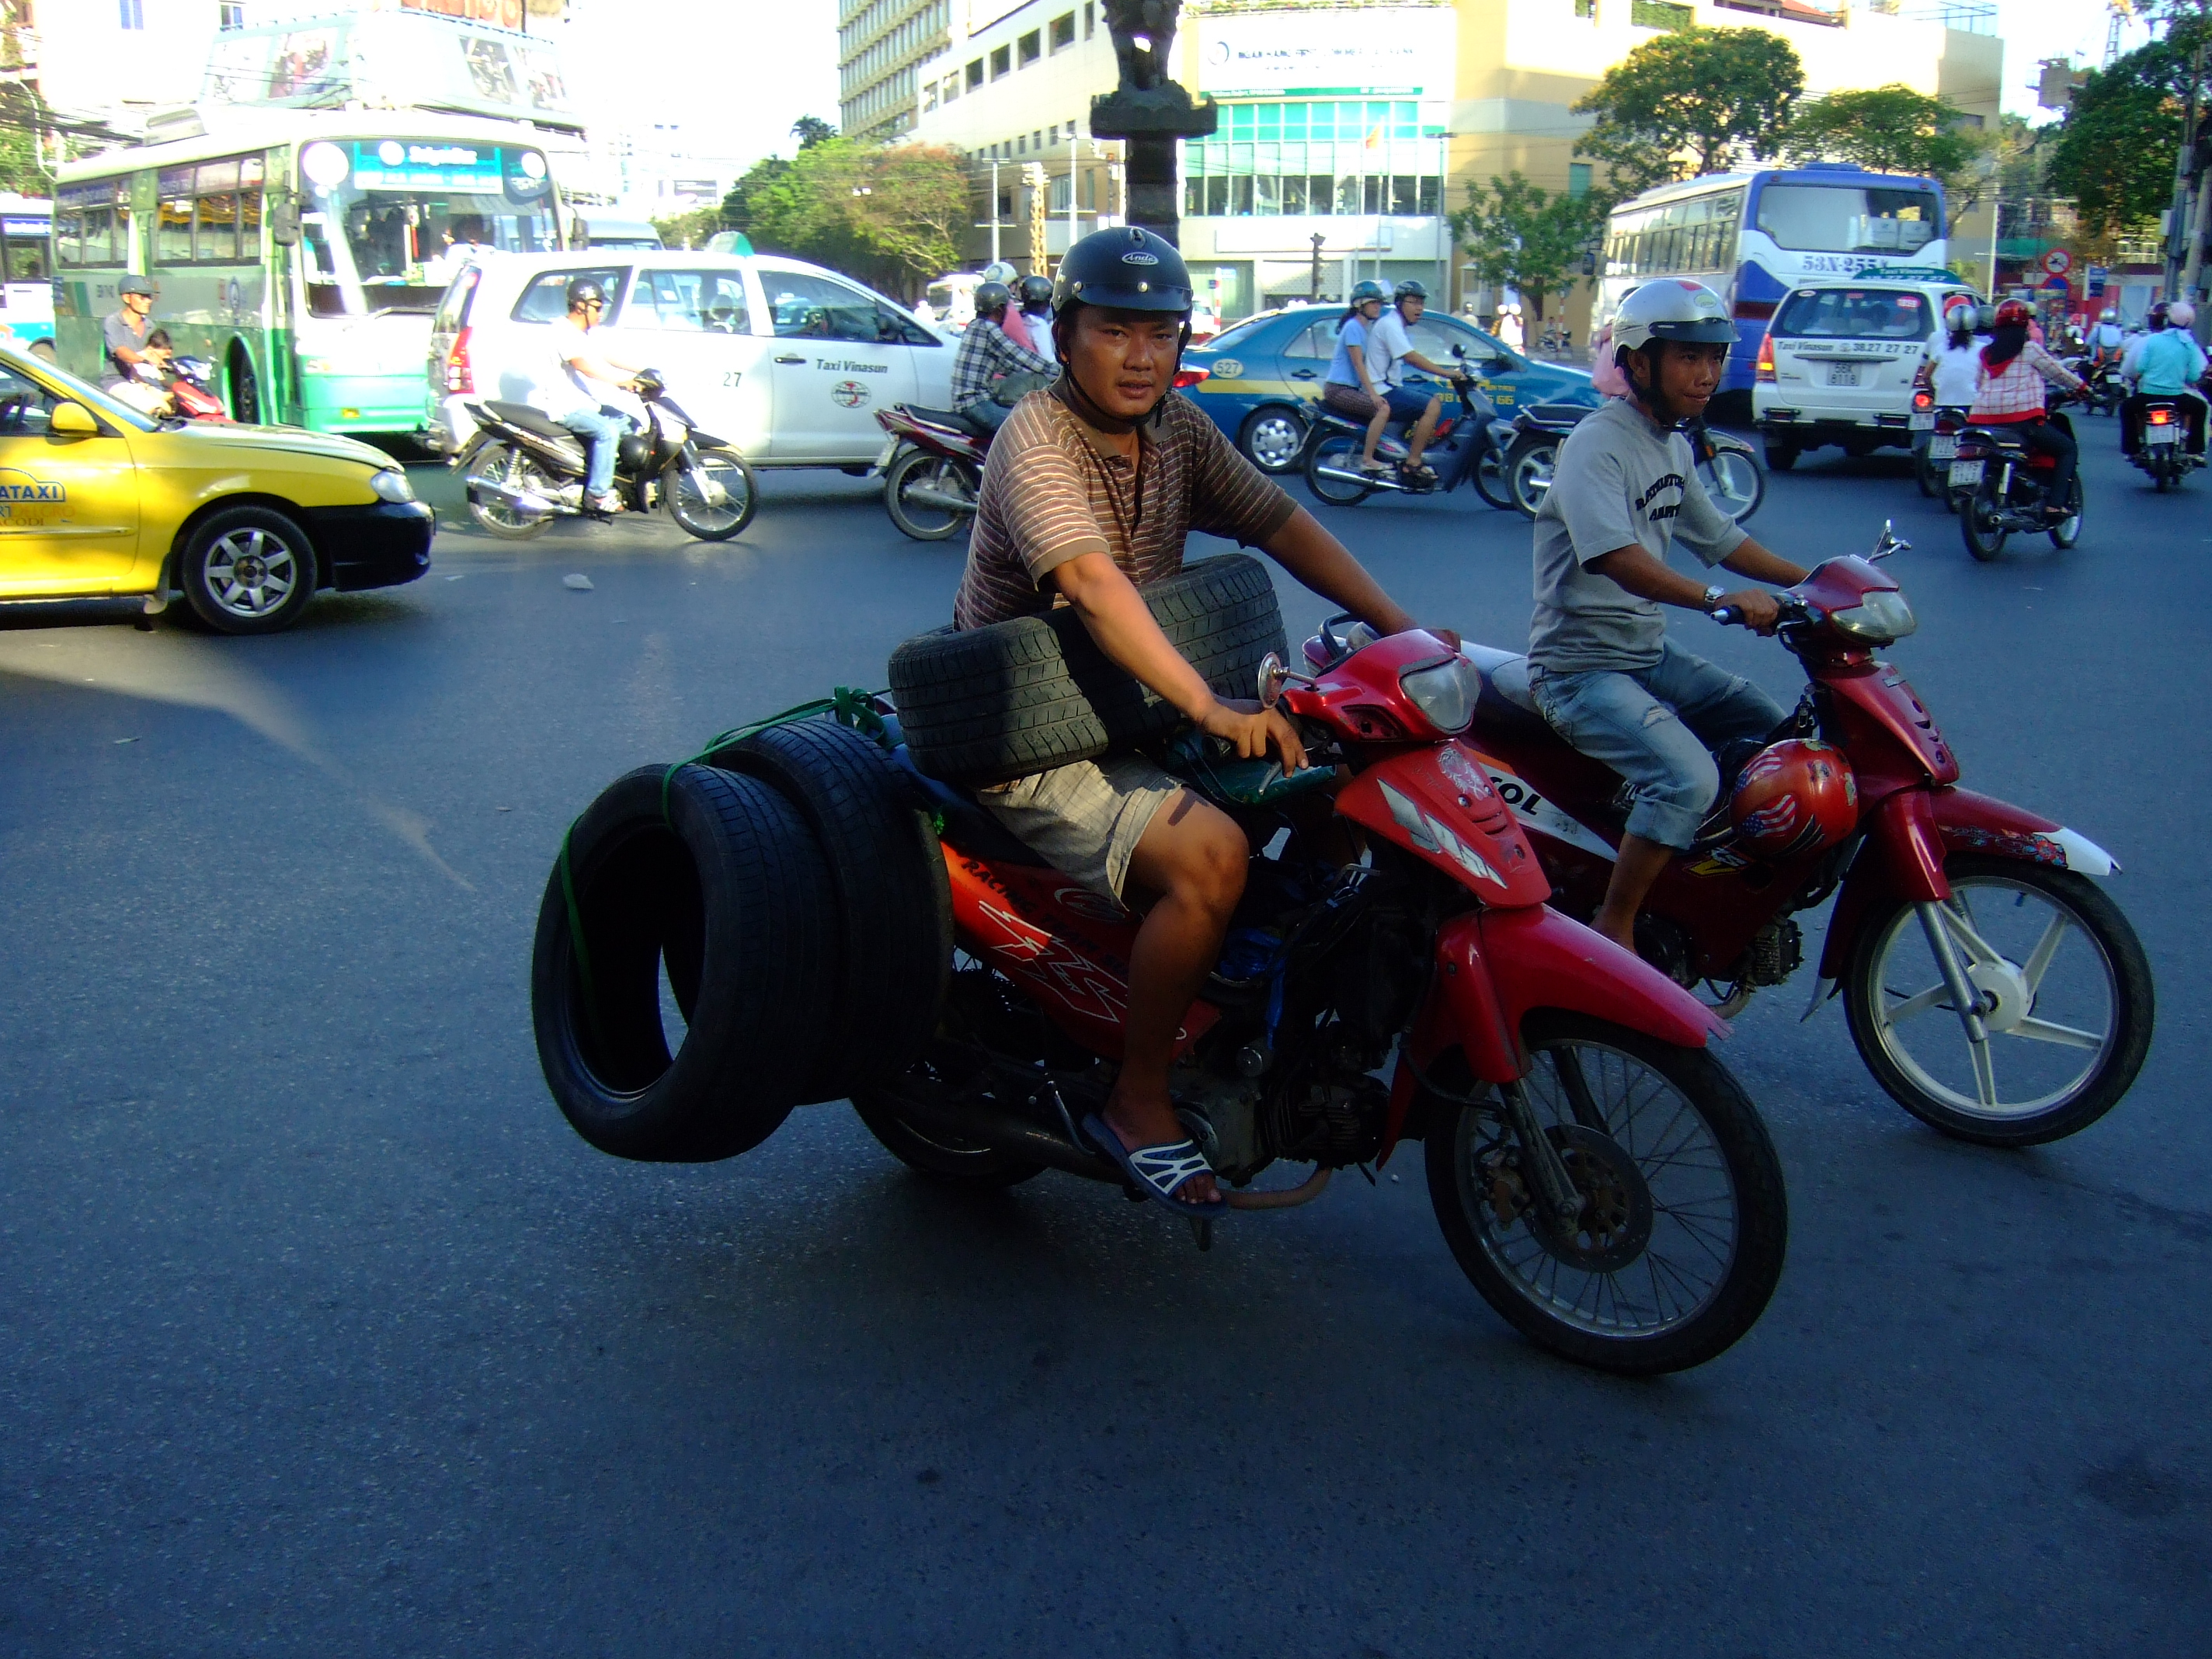 Vietnam Ho Chi Minh City motorbike street scenes Feb 2009 083